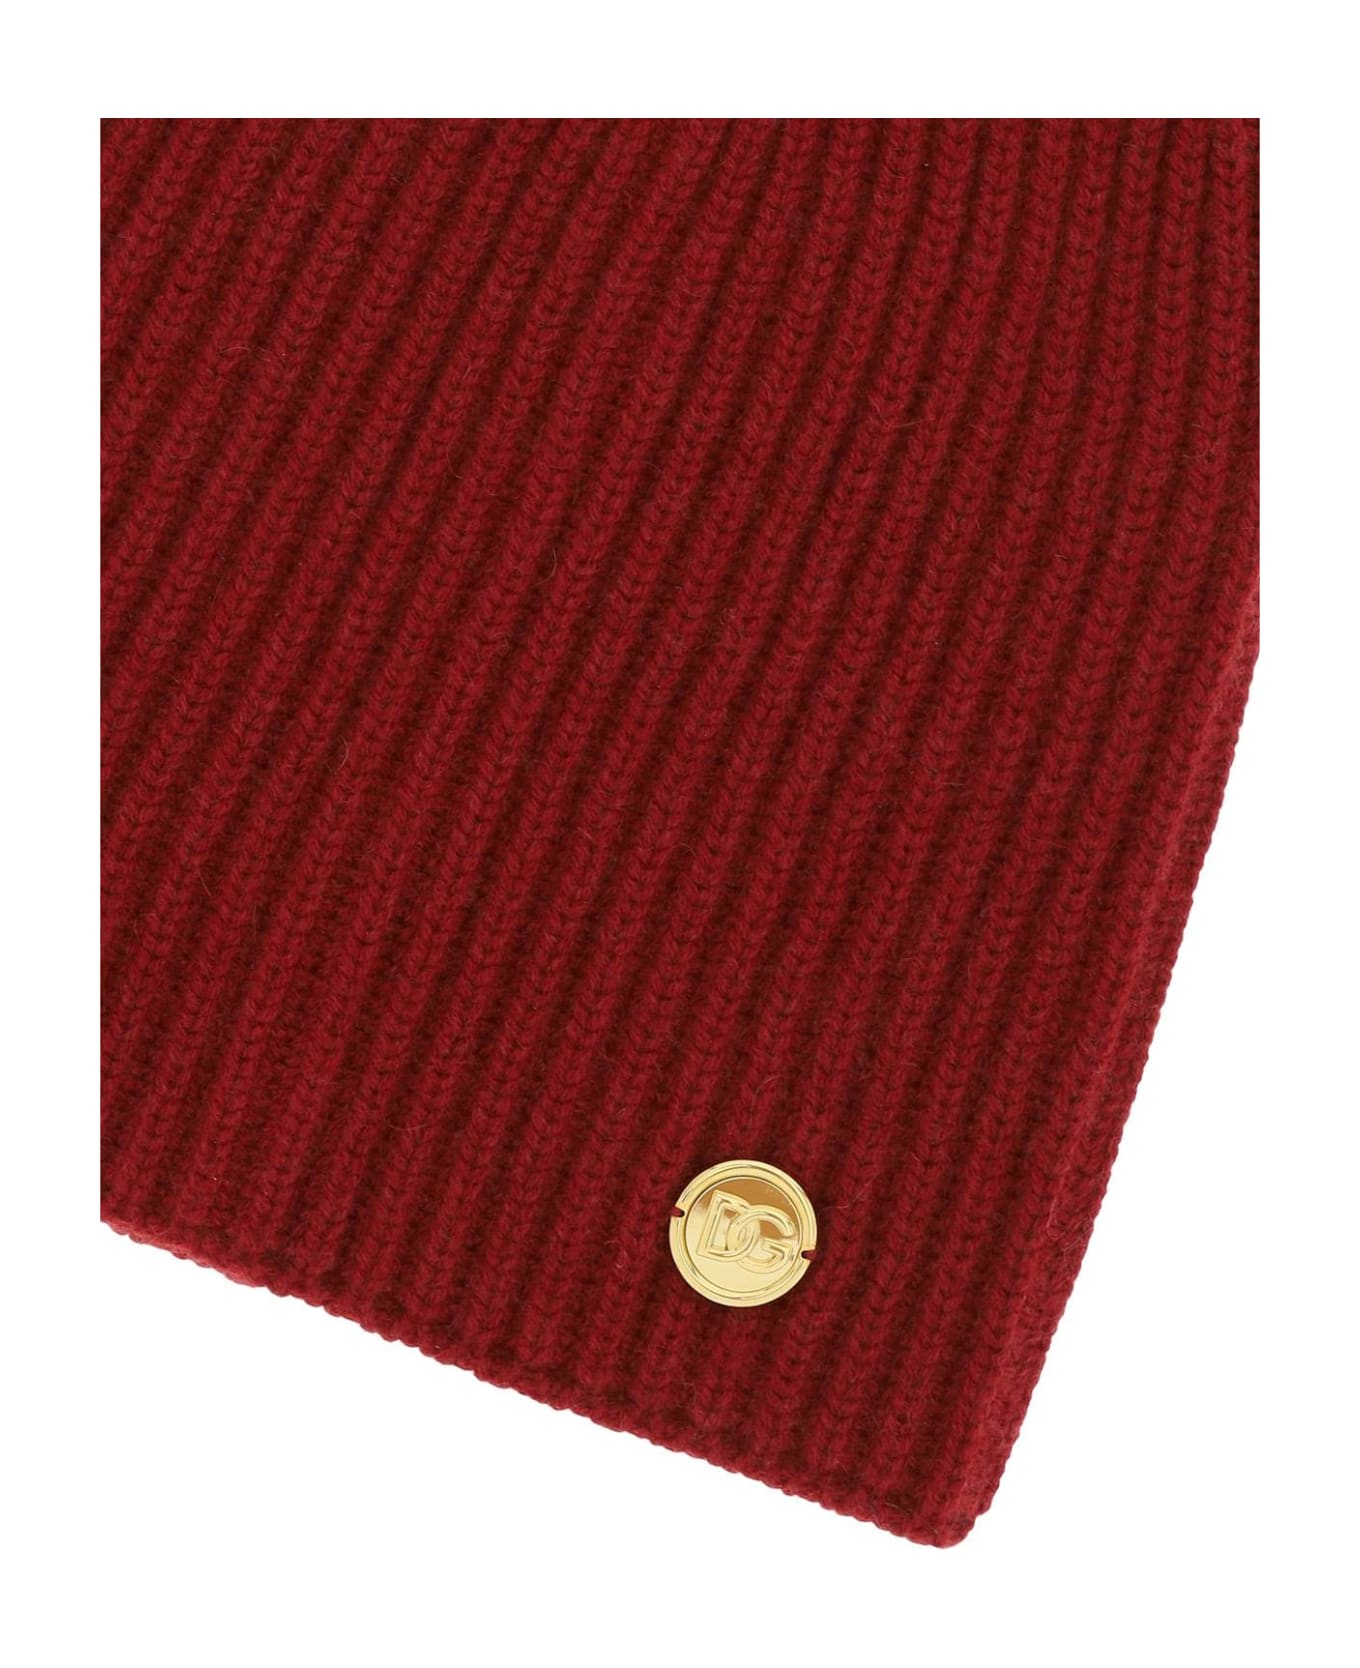 Dolce & Gabbana Cashmere Beanie Hat - BORDEAUX (Red)